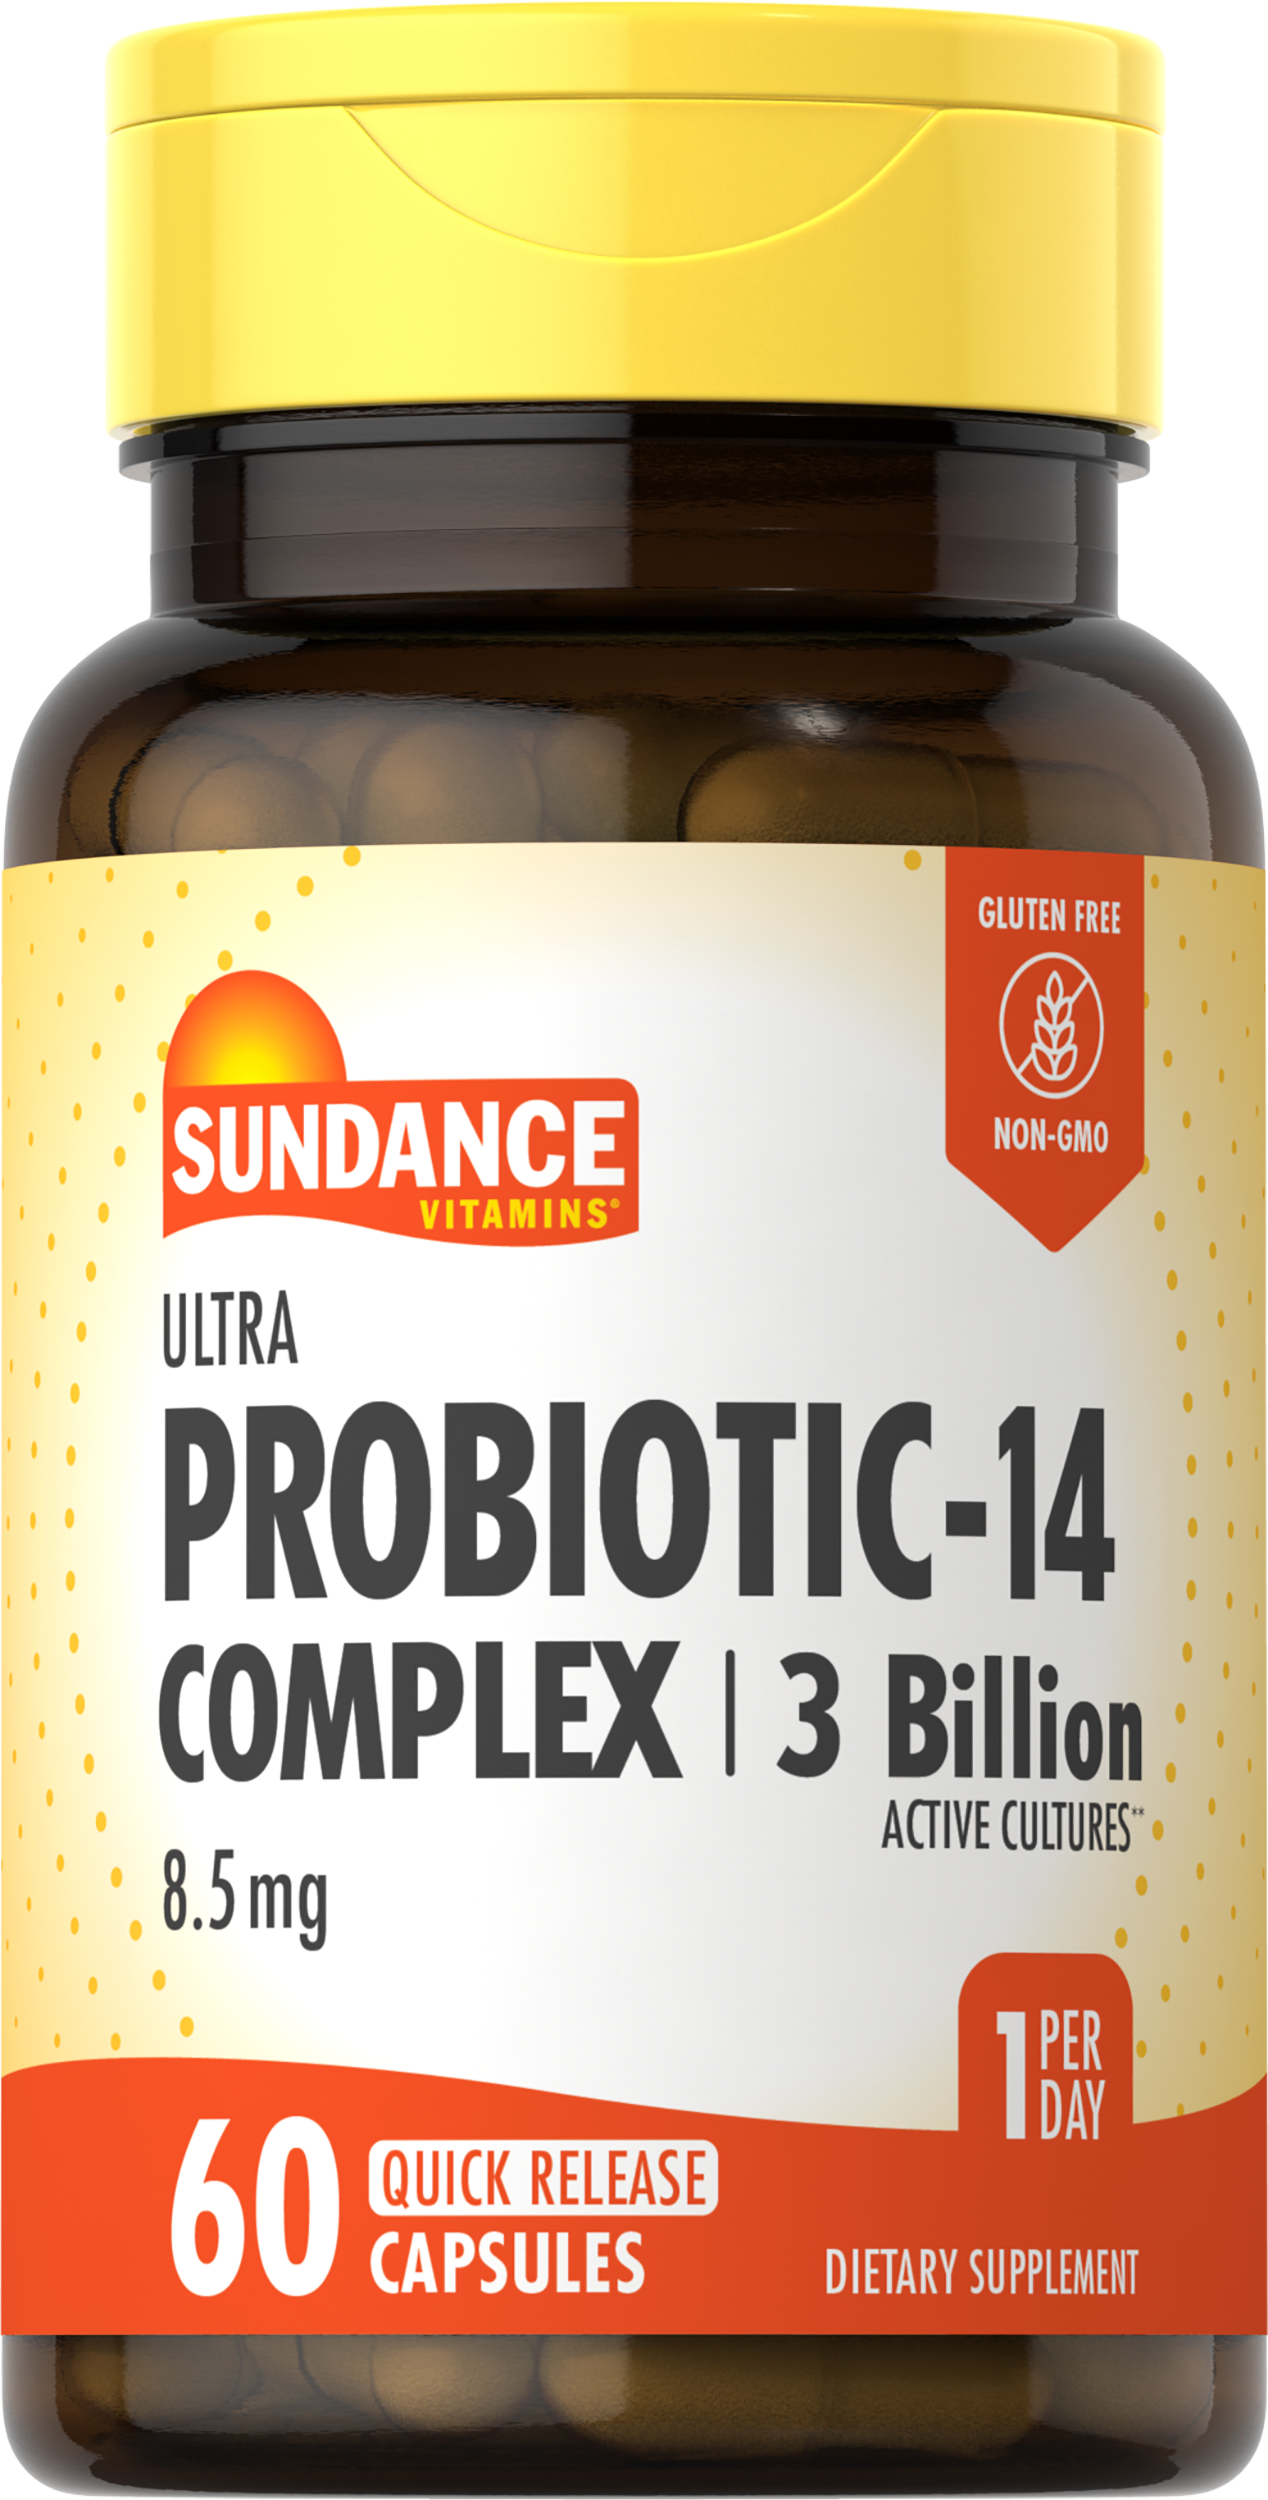 Probiotic-14 Complex 3 Billion Active Cultures